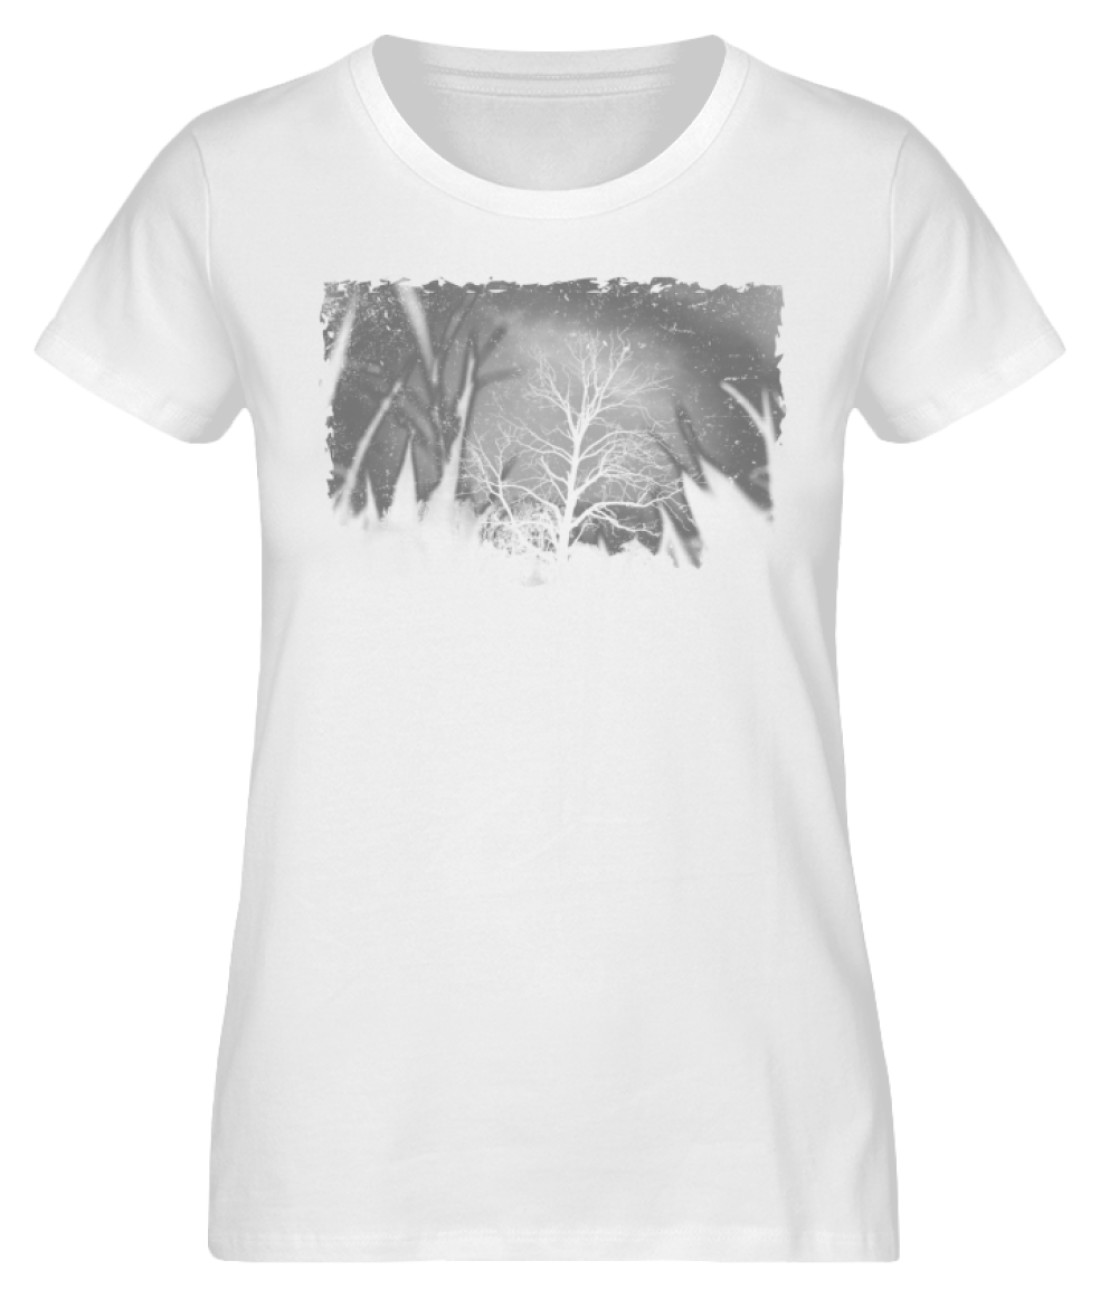 Tree in the field (Damen/Tailliert Premium Organic T-Shirt ST/ST)